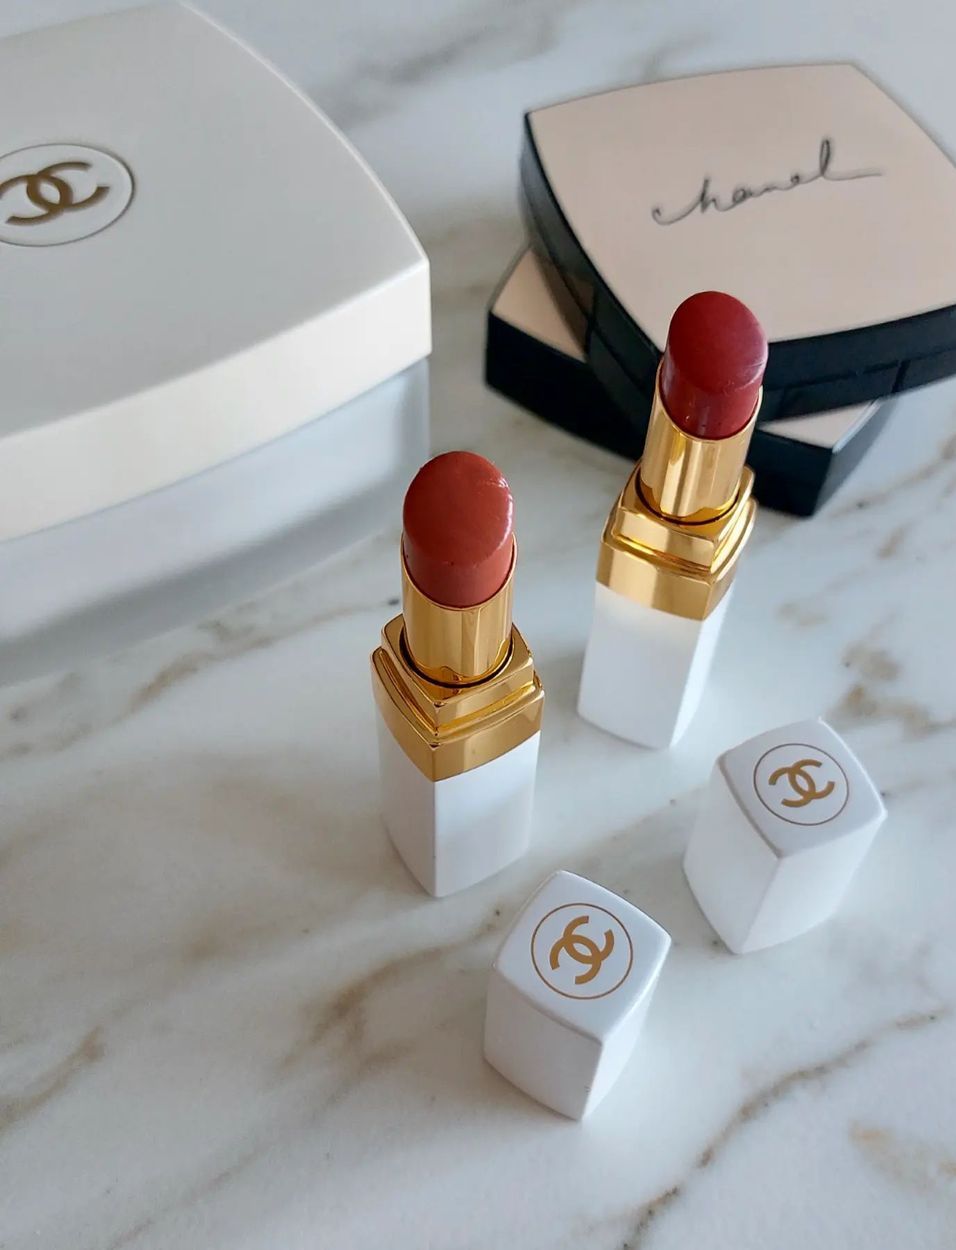 ROUGE COCO - Gabrielle Chanel's Lipstick Friends - StyleScoop